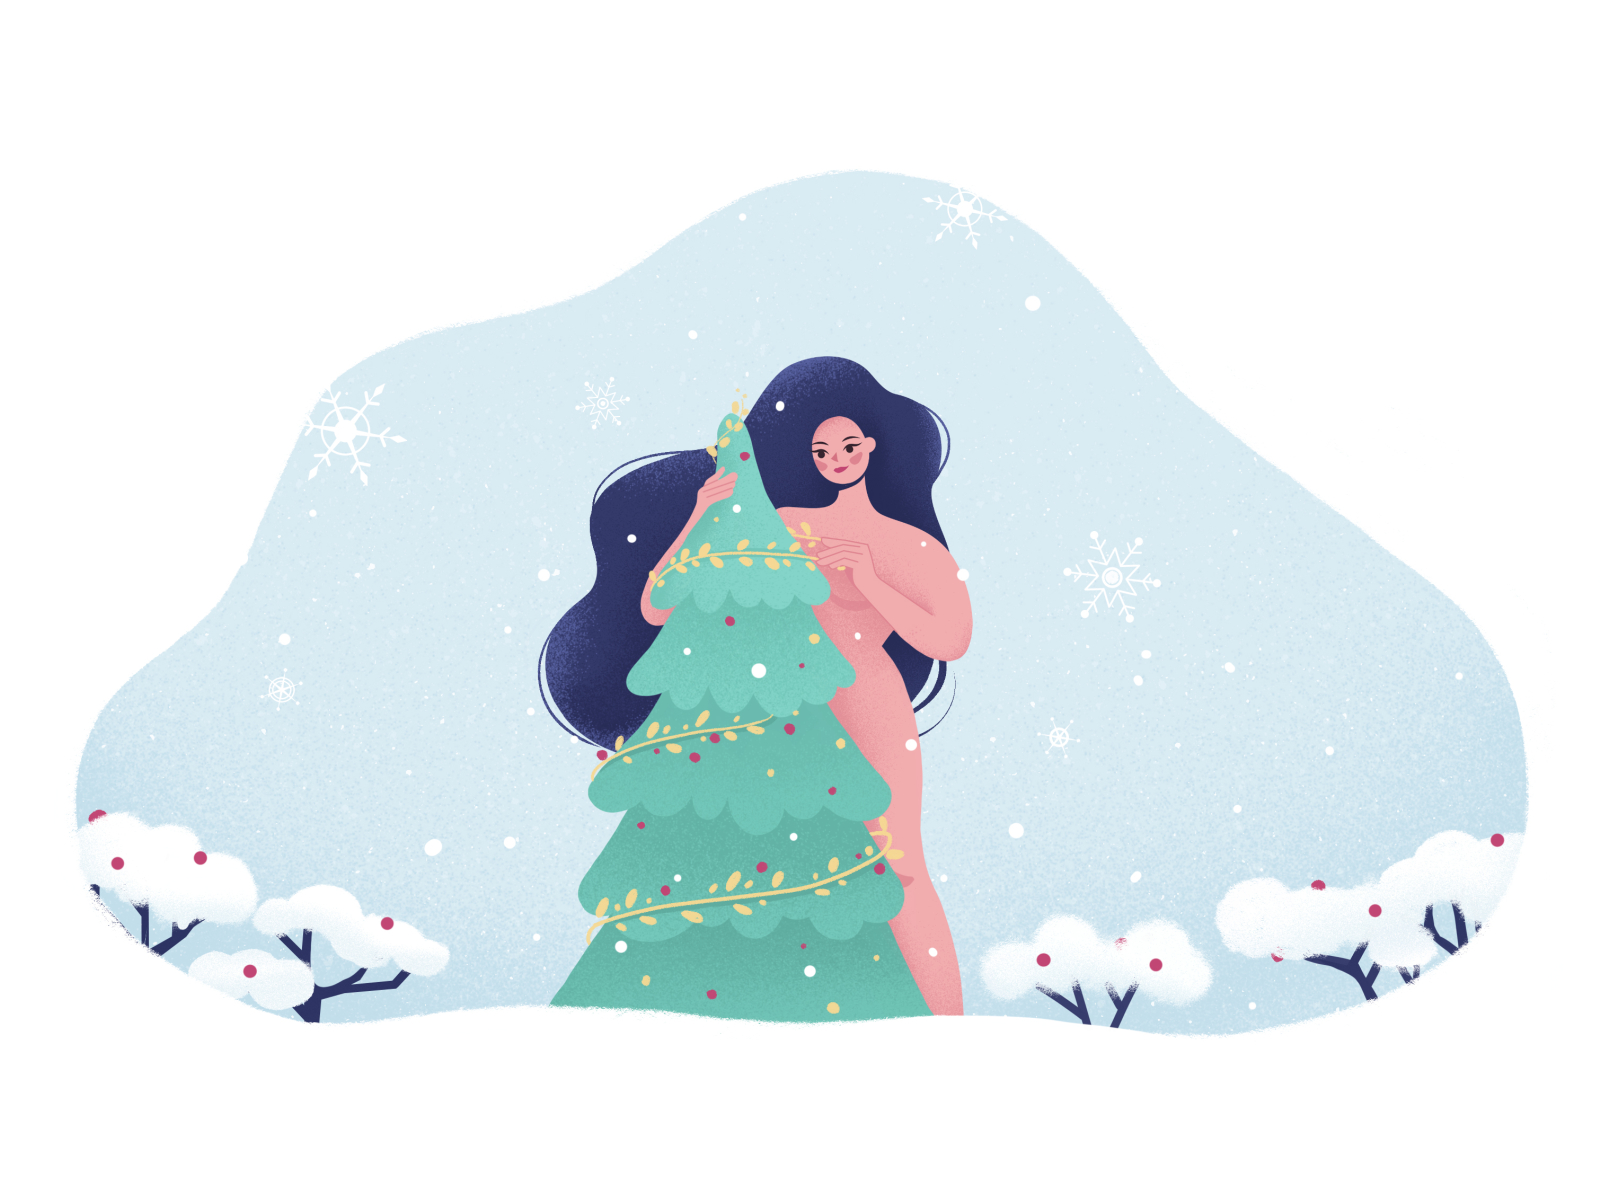 Christmas tree character girl holiday illustration nude snowflake texture winter